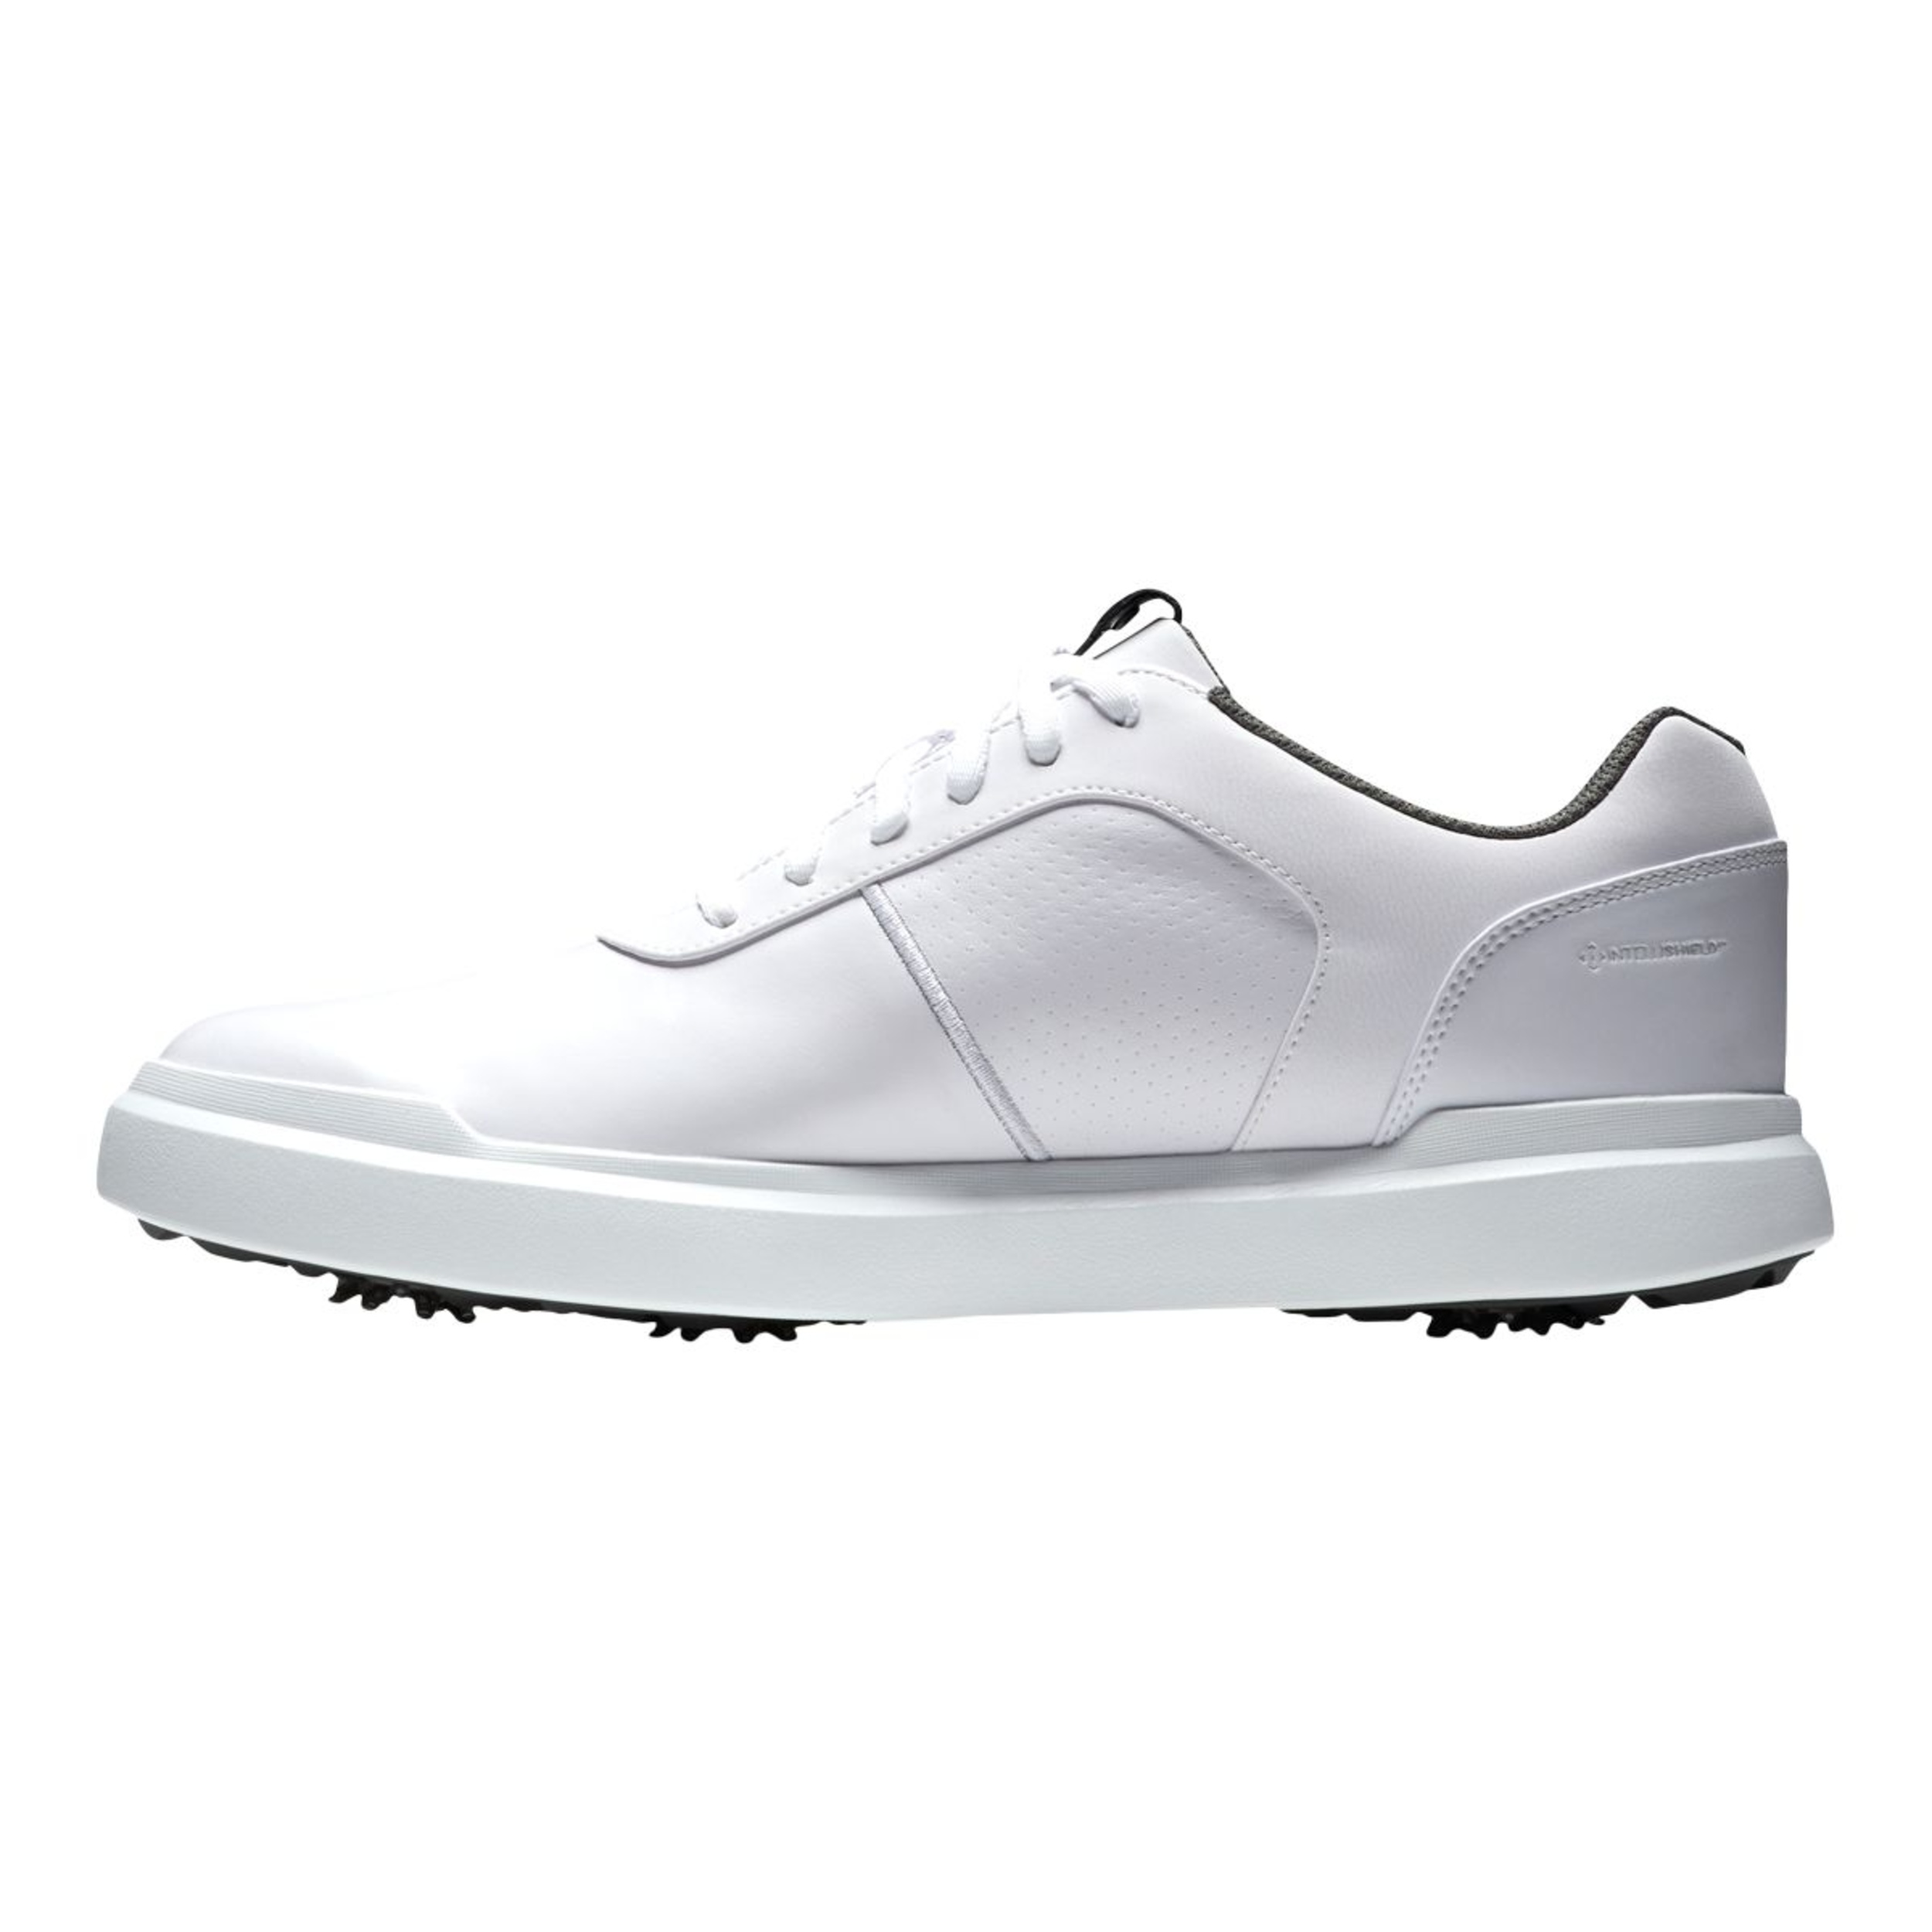 Footjoy Men's Contour Series Golf Shoes, Wide Width, Spiked, Waterproof ...